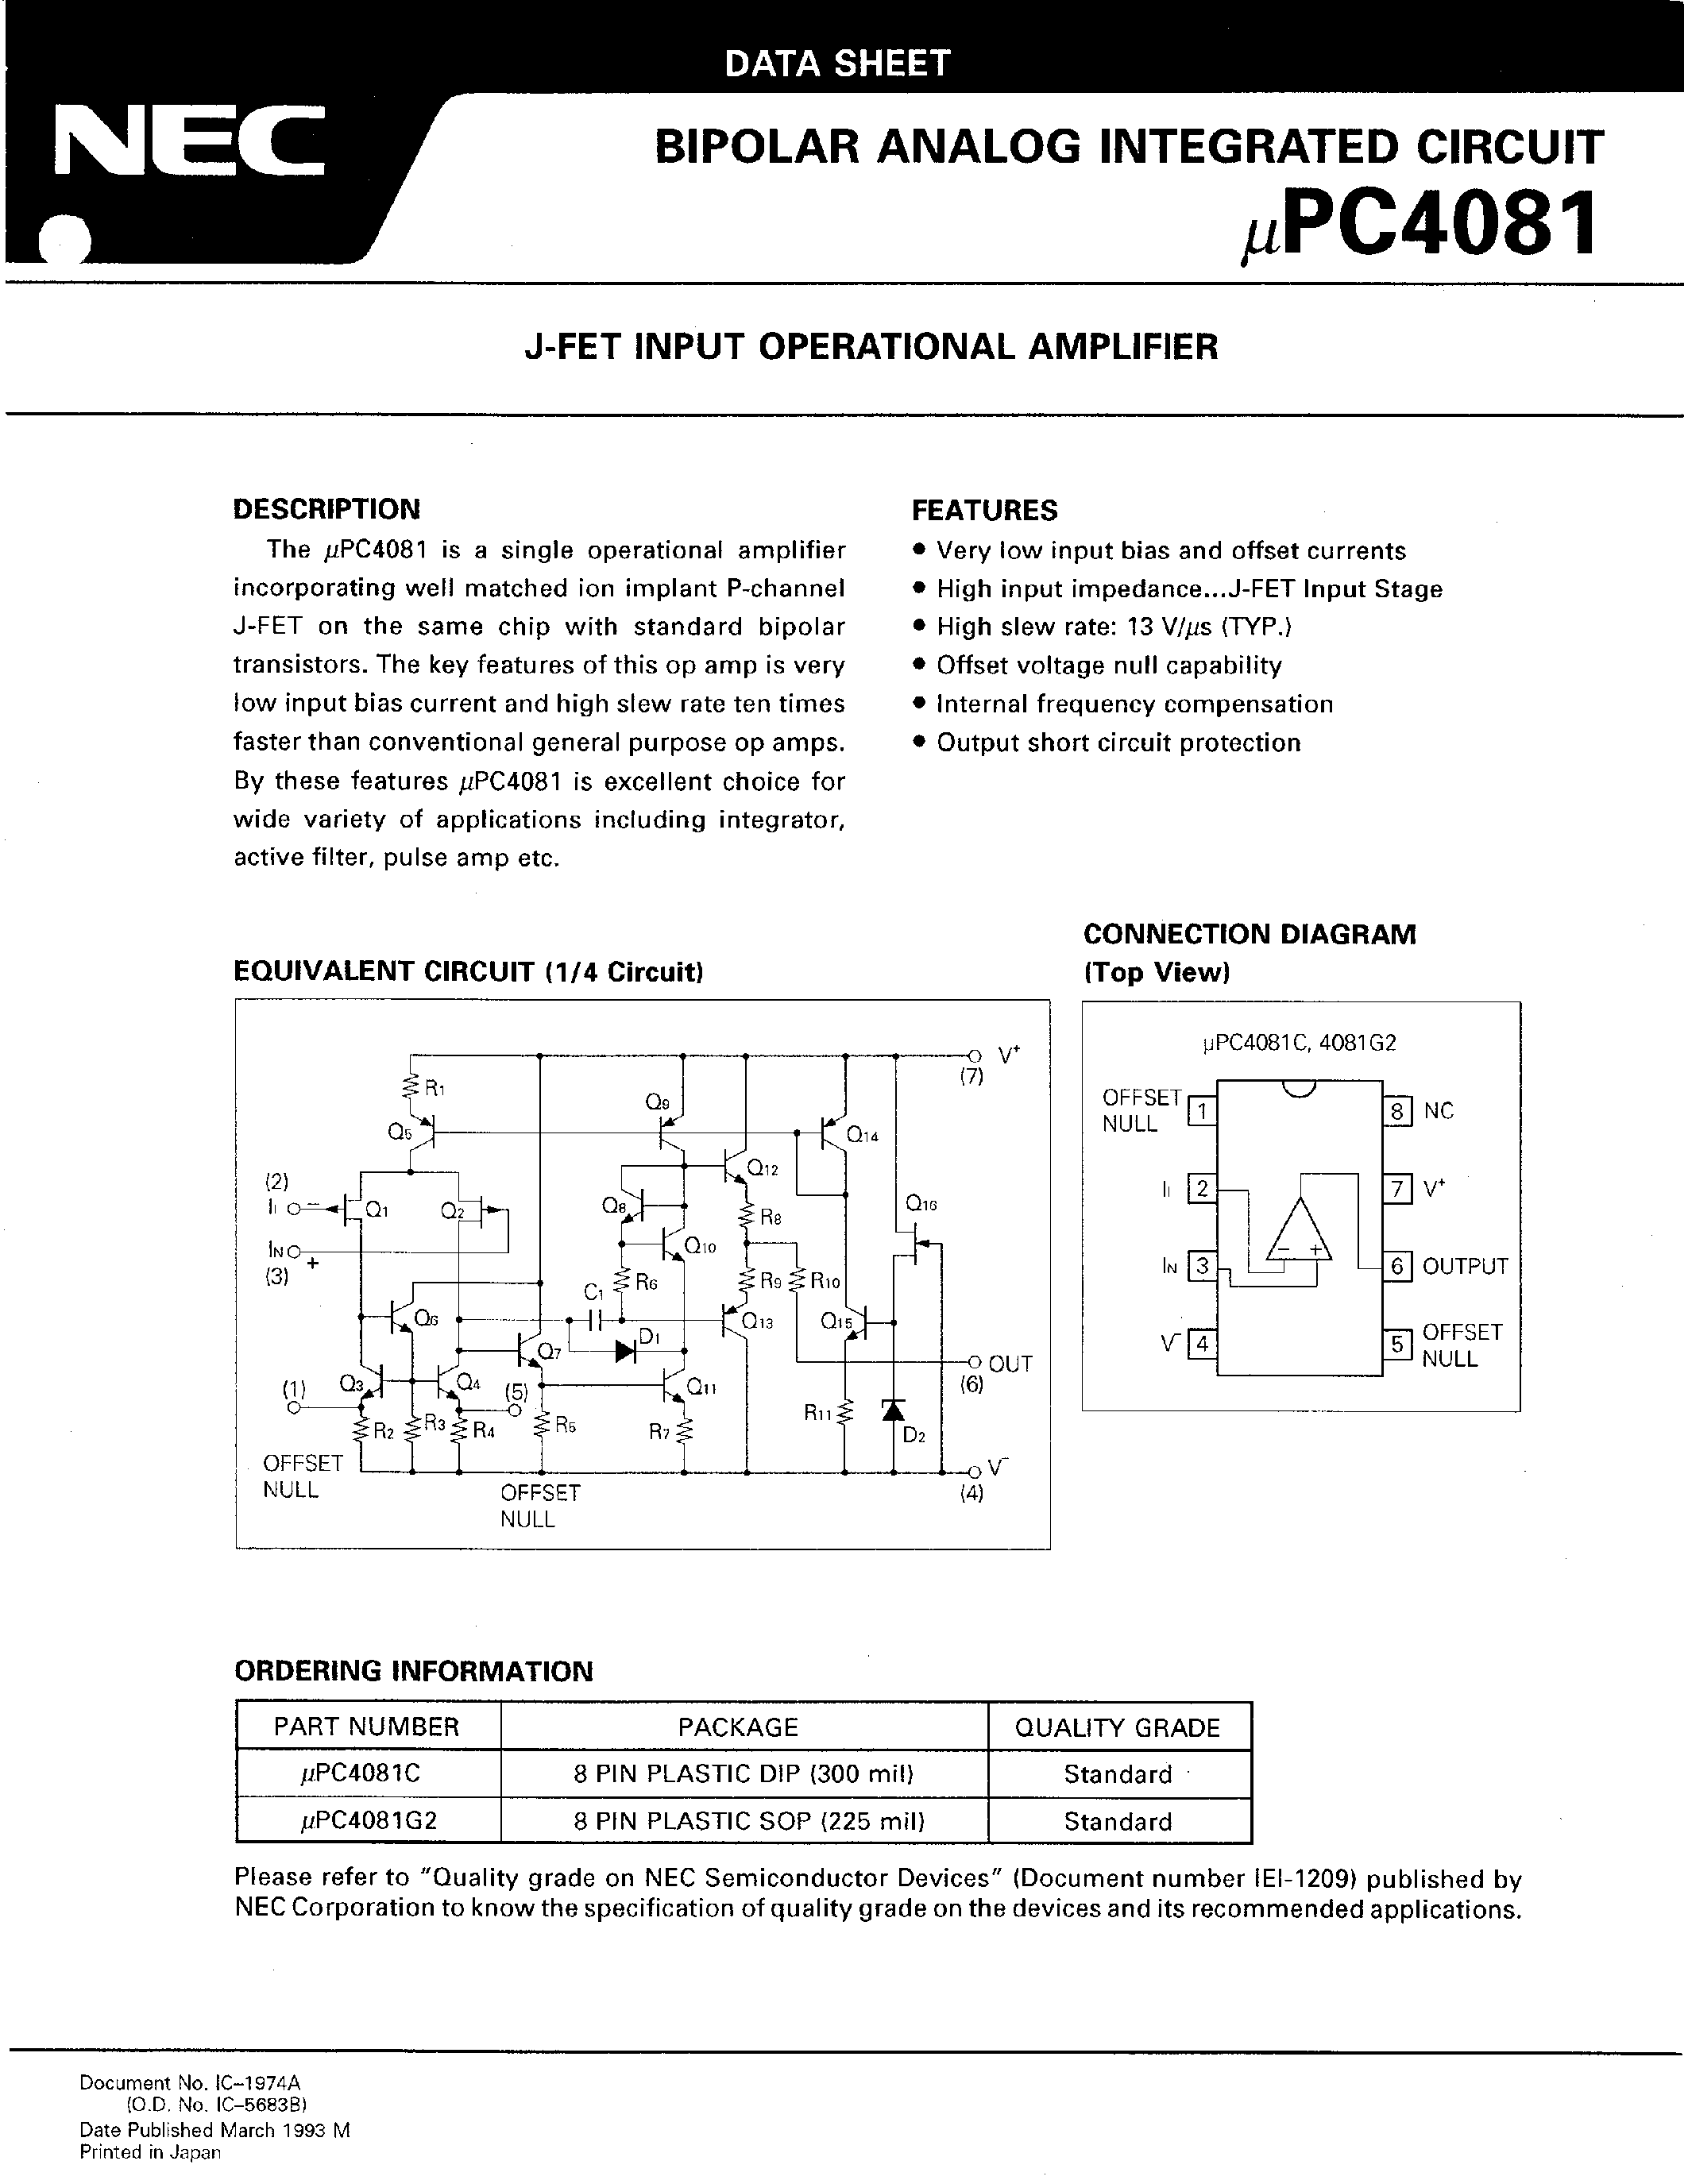 Datasheet UPC4081 - J-FET INPUT OPERATIONAL AMPLIFIER page 1